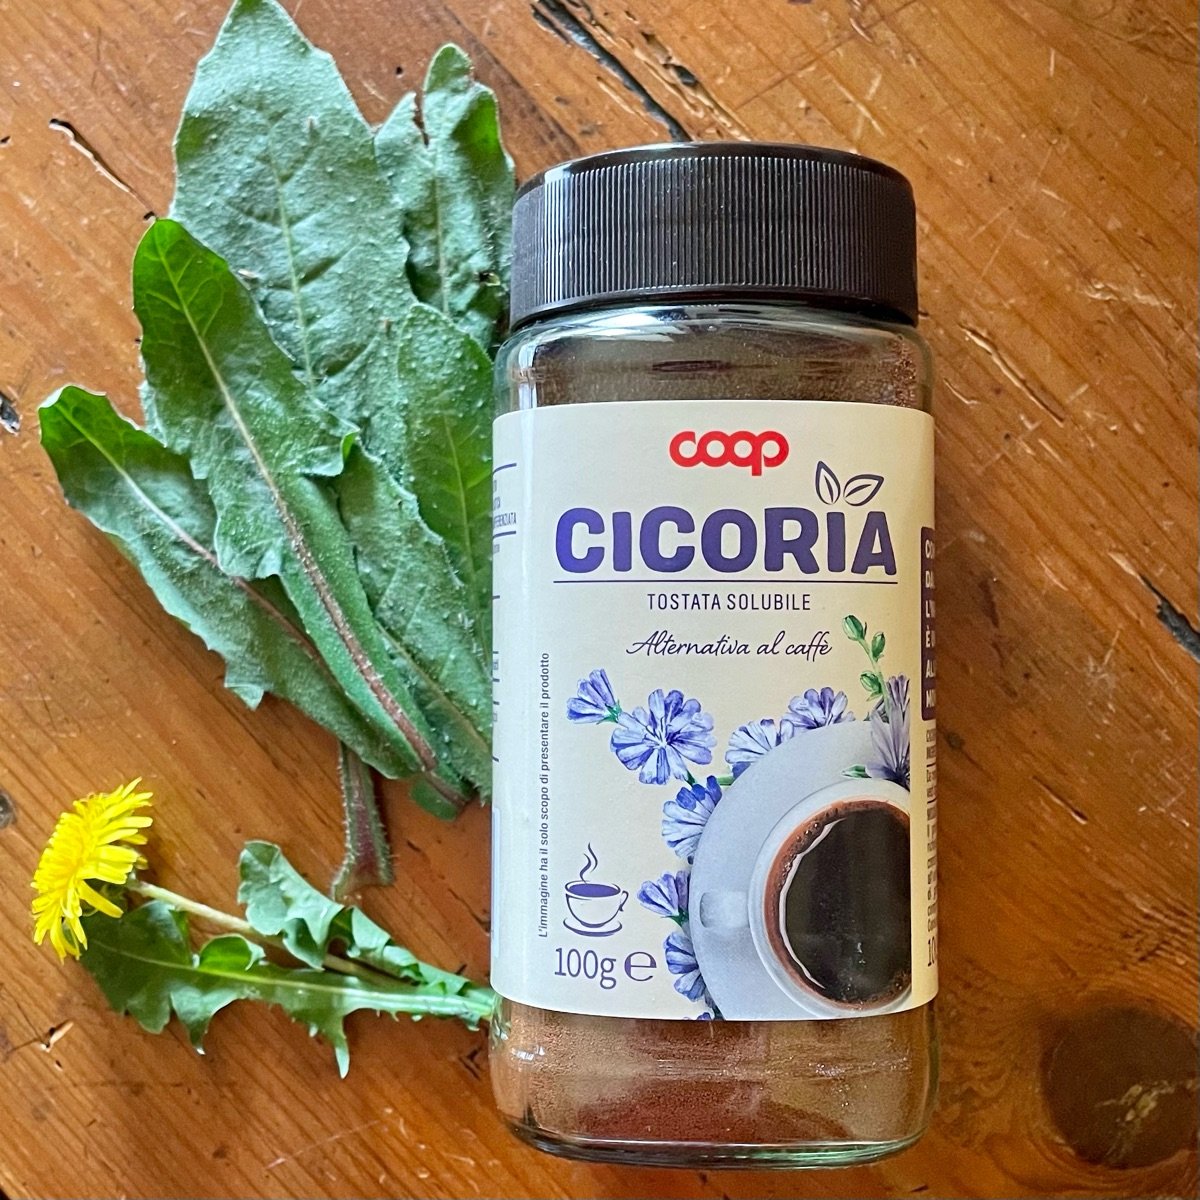 Coop Cicoria tostata solubile Reviews